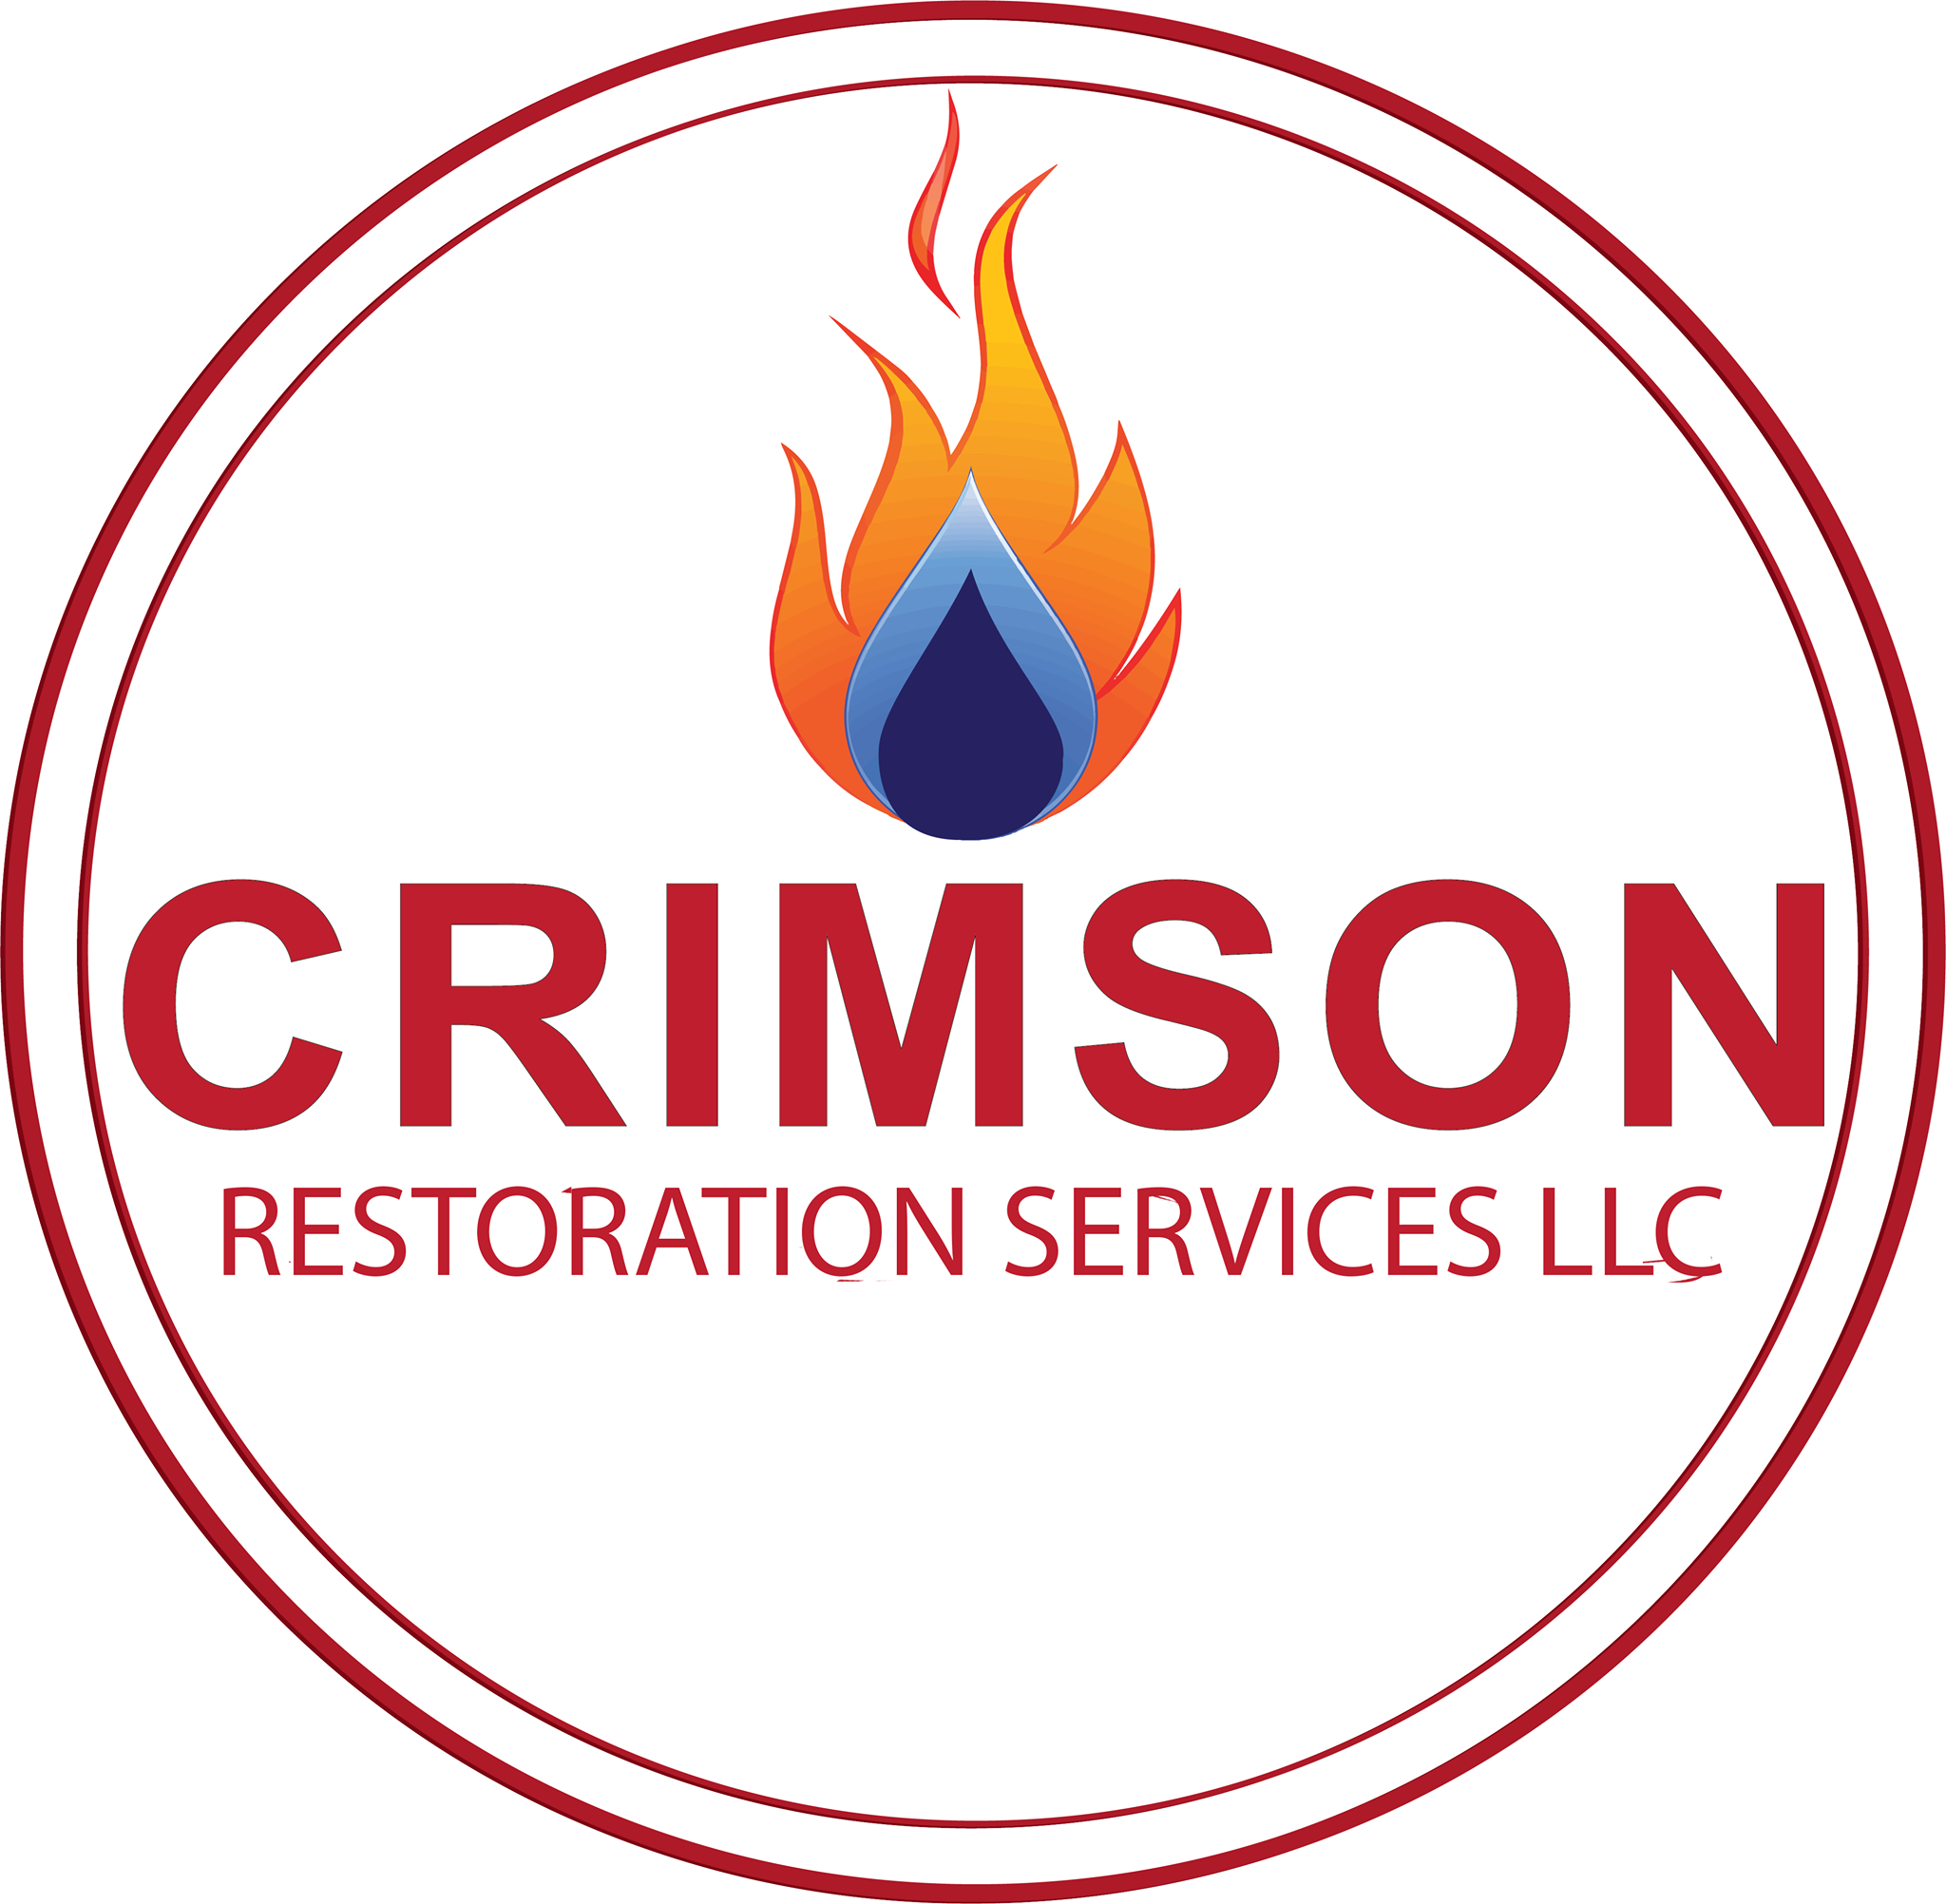 Crimson Restoration Services LLC